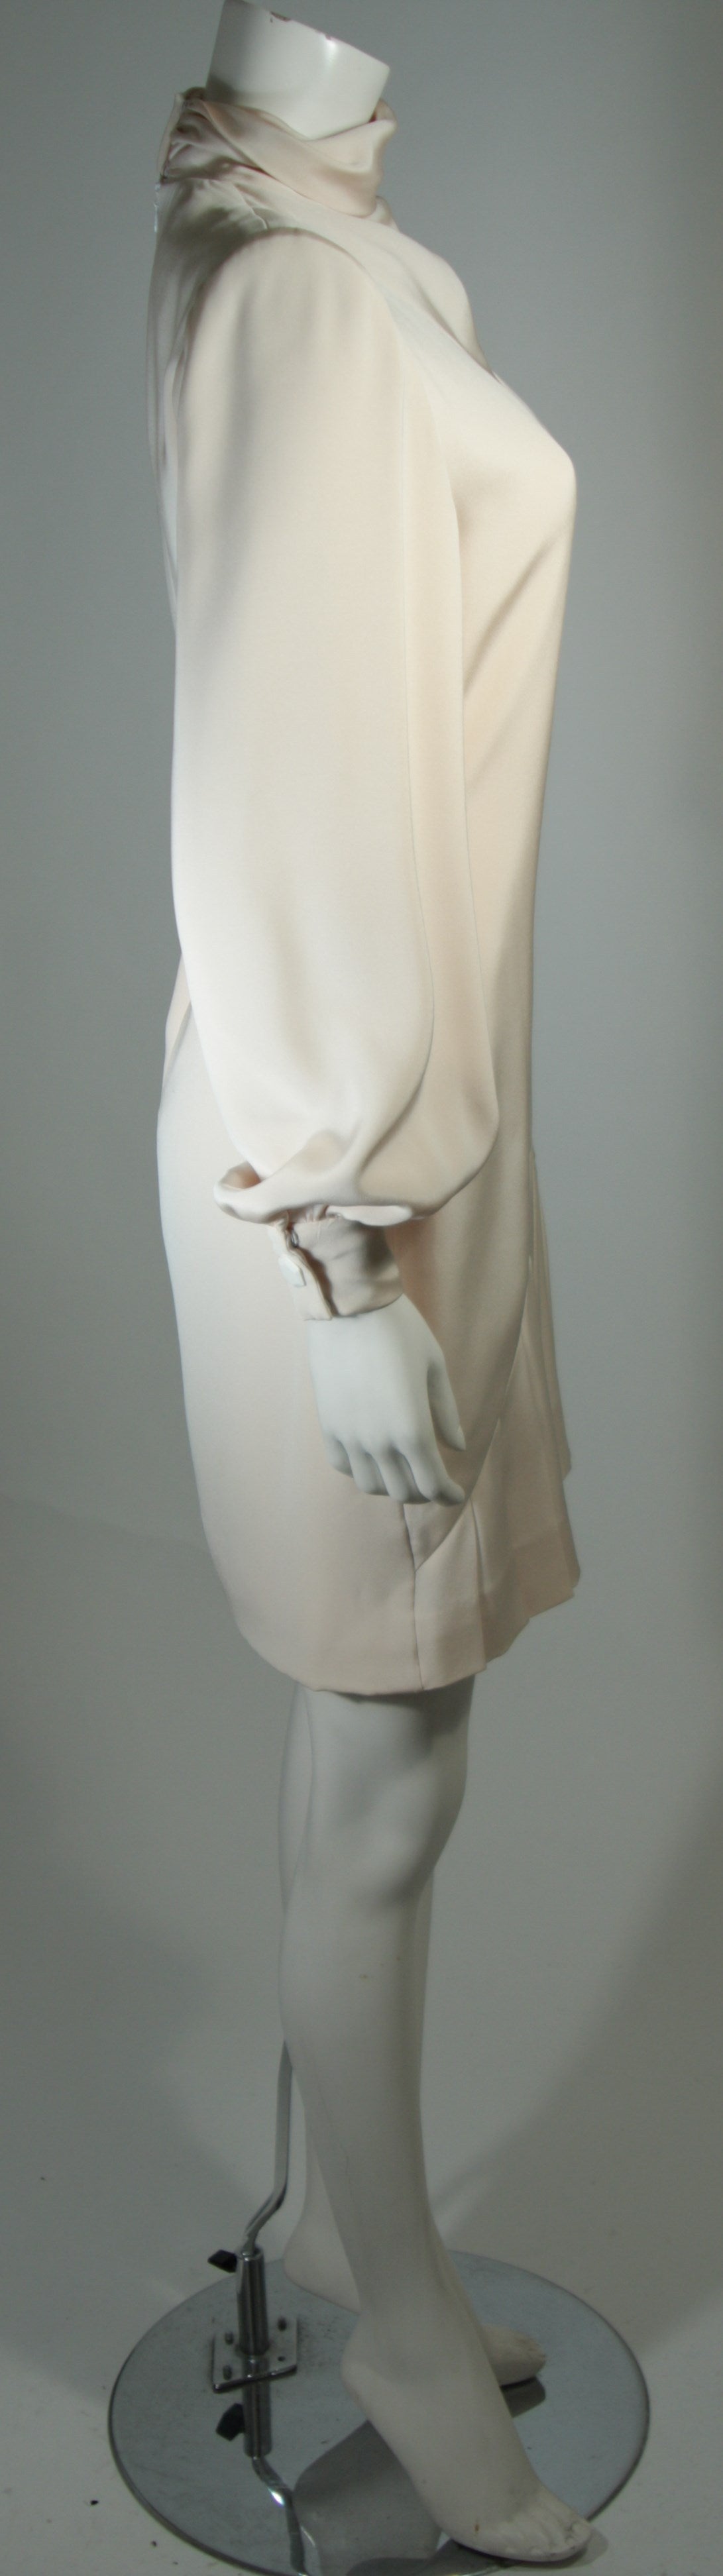 Galanos Couture Cream Silk Cocktail Dress Size 2 4 1